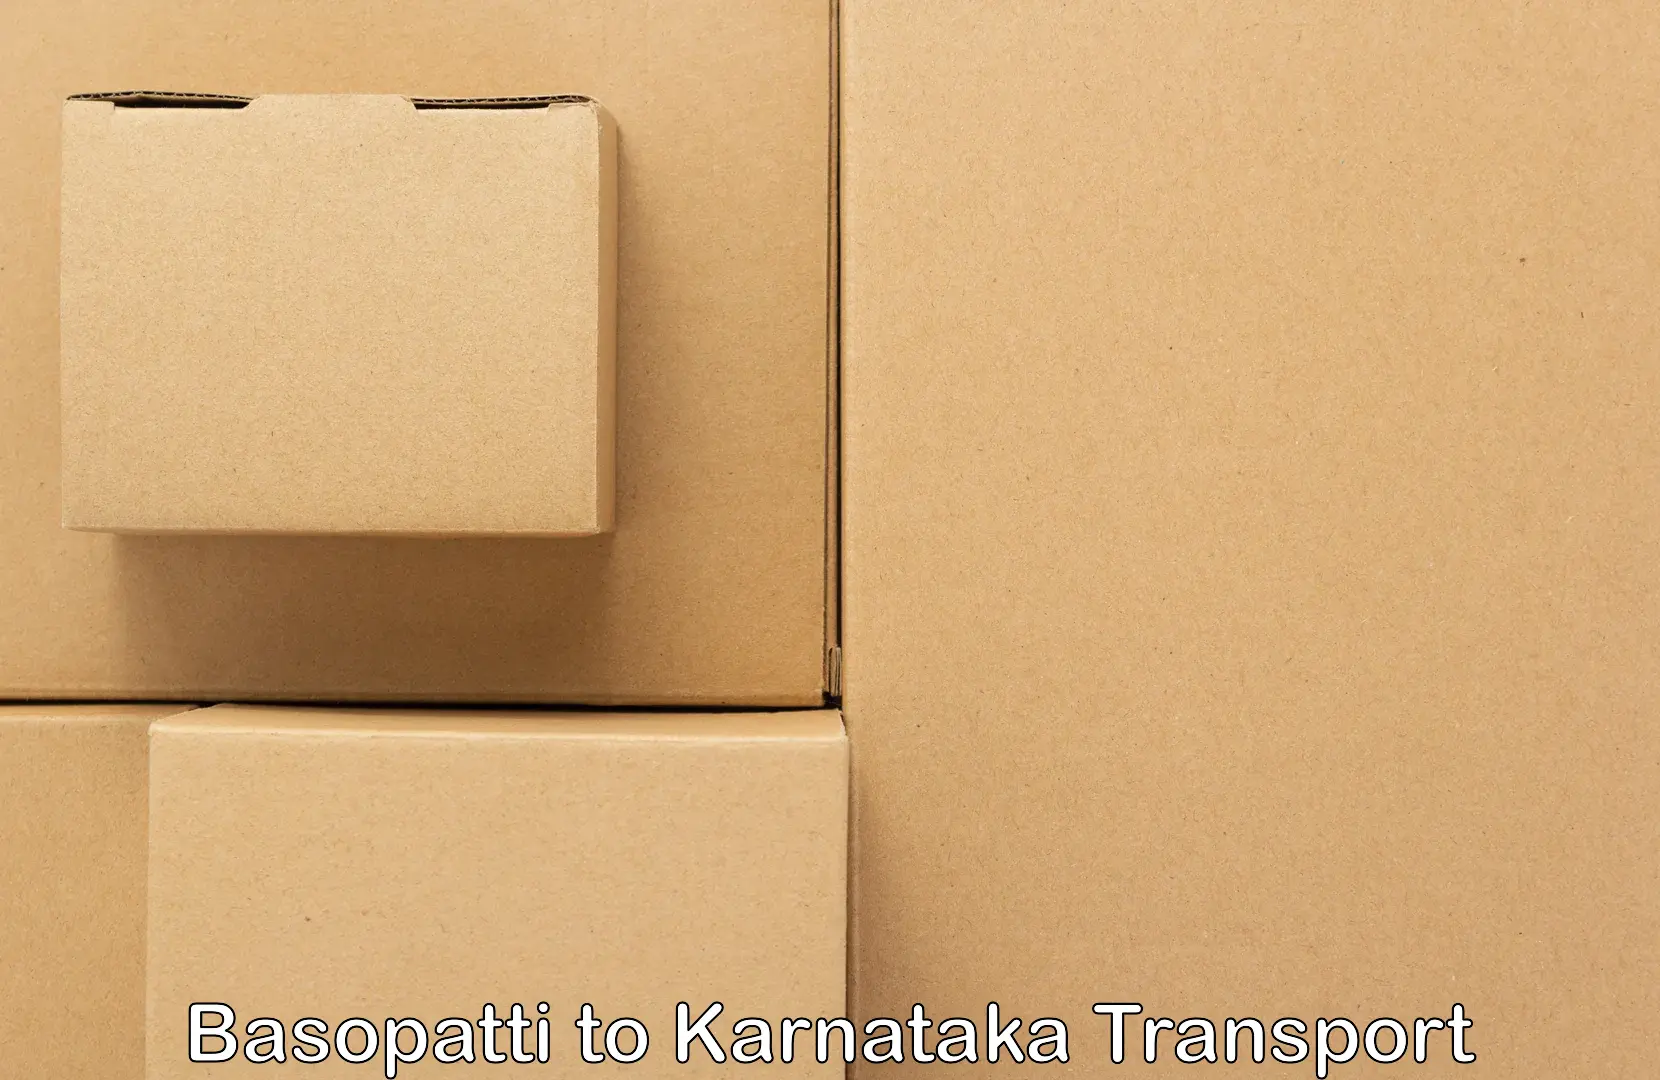 Two wheeler parcel service in Basopatti to Bangalore